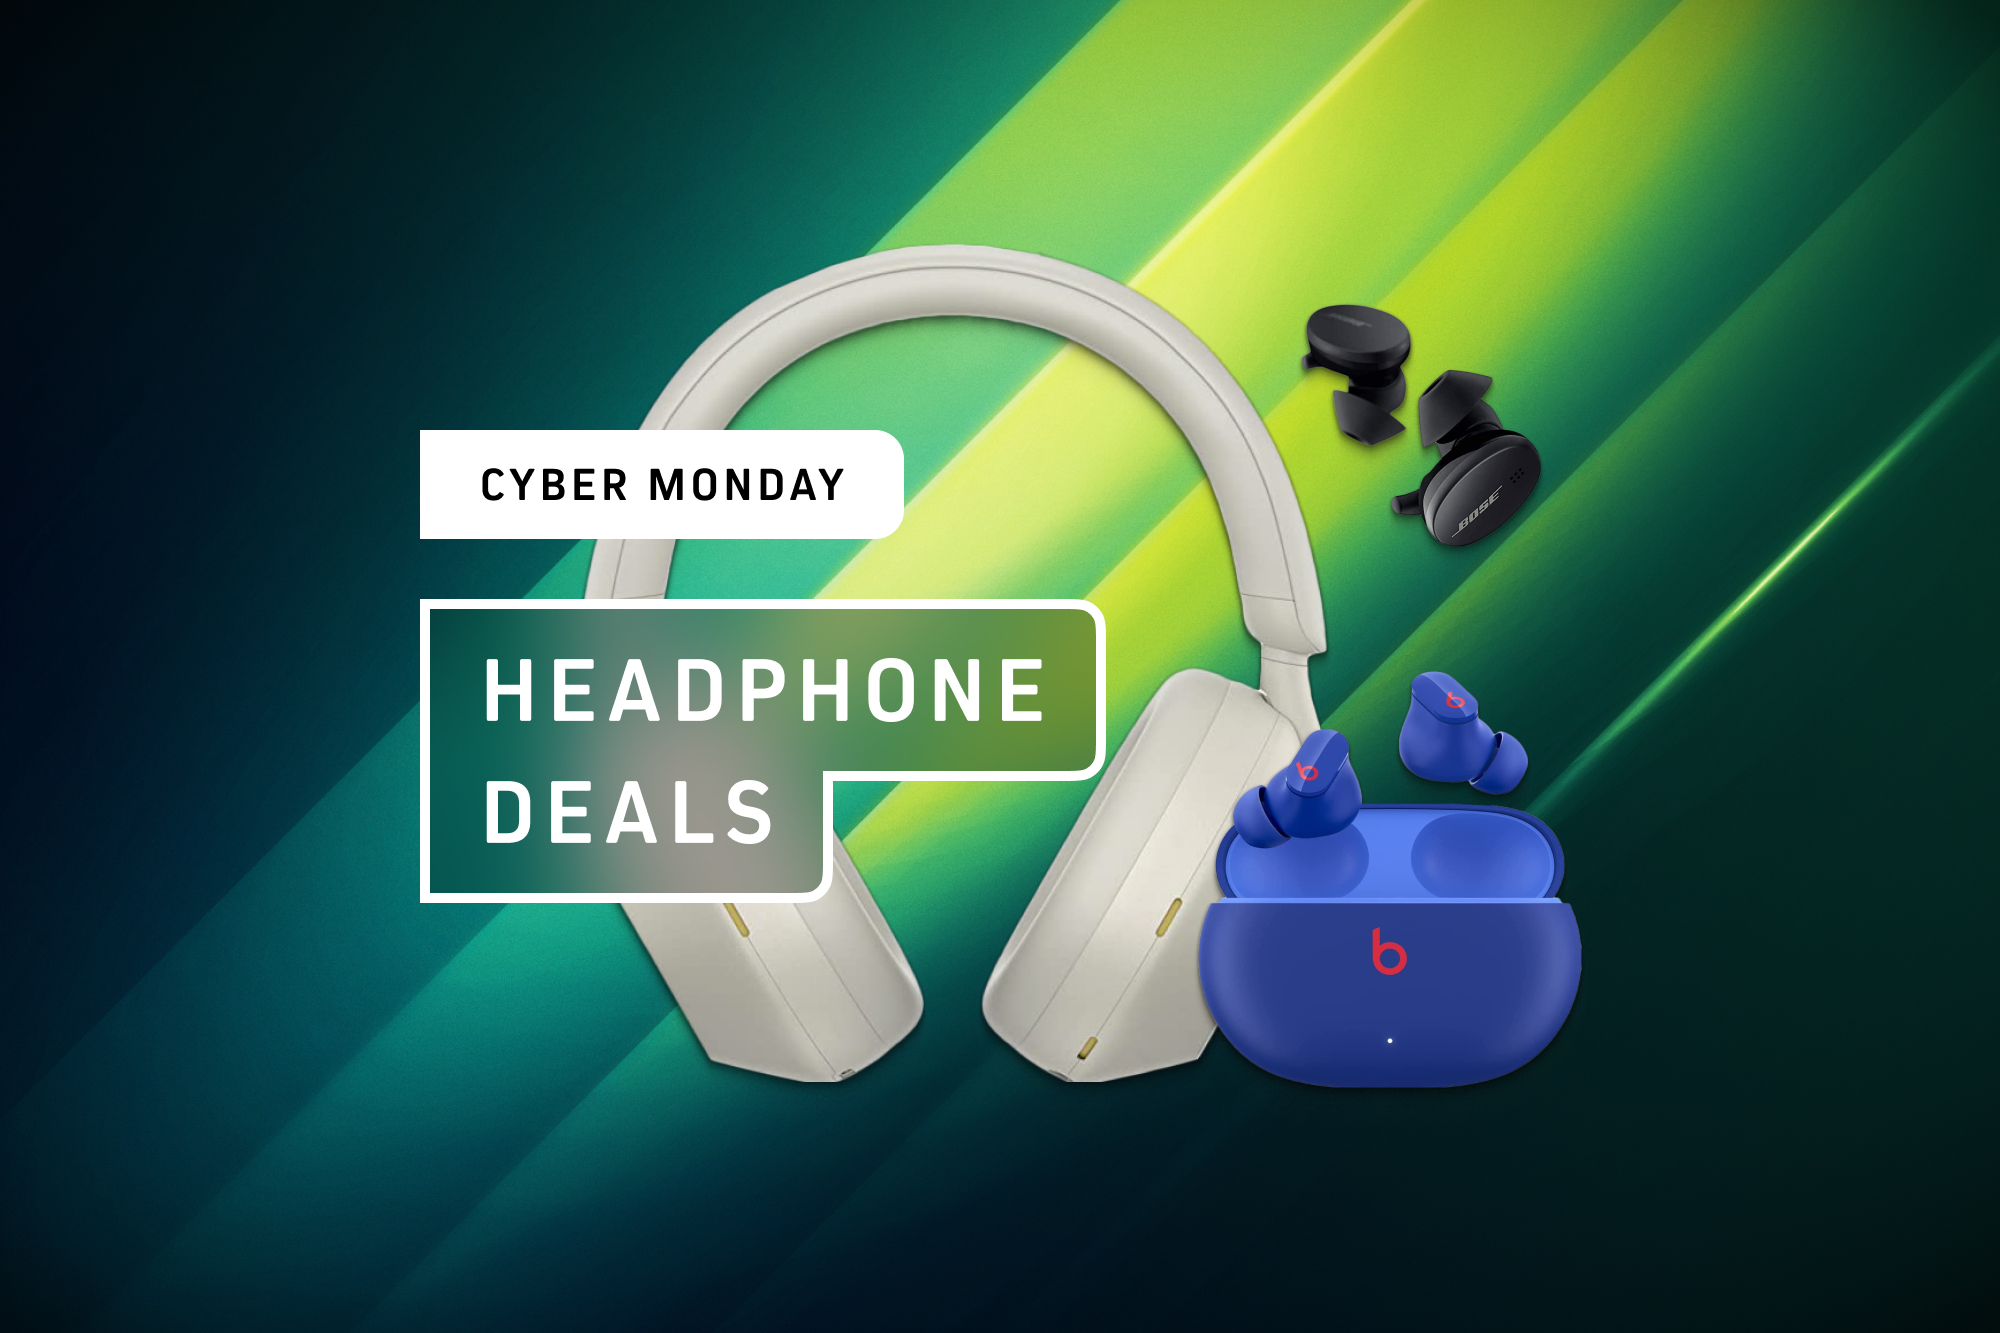 Bose QuietComfort 45 headphones Cyber Monday deal: Save $100 at